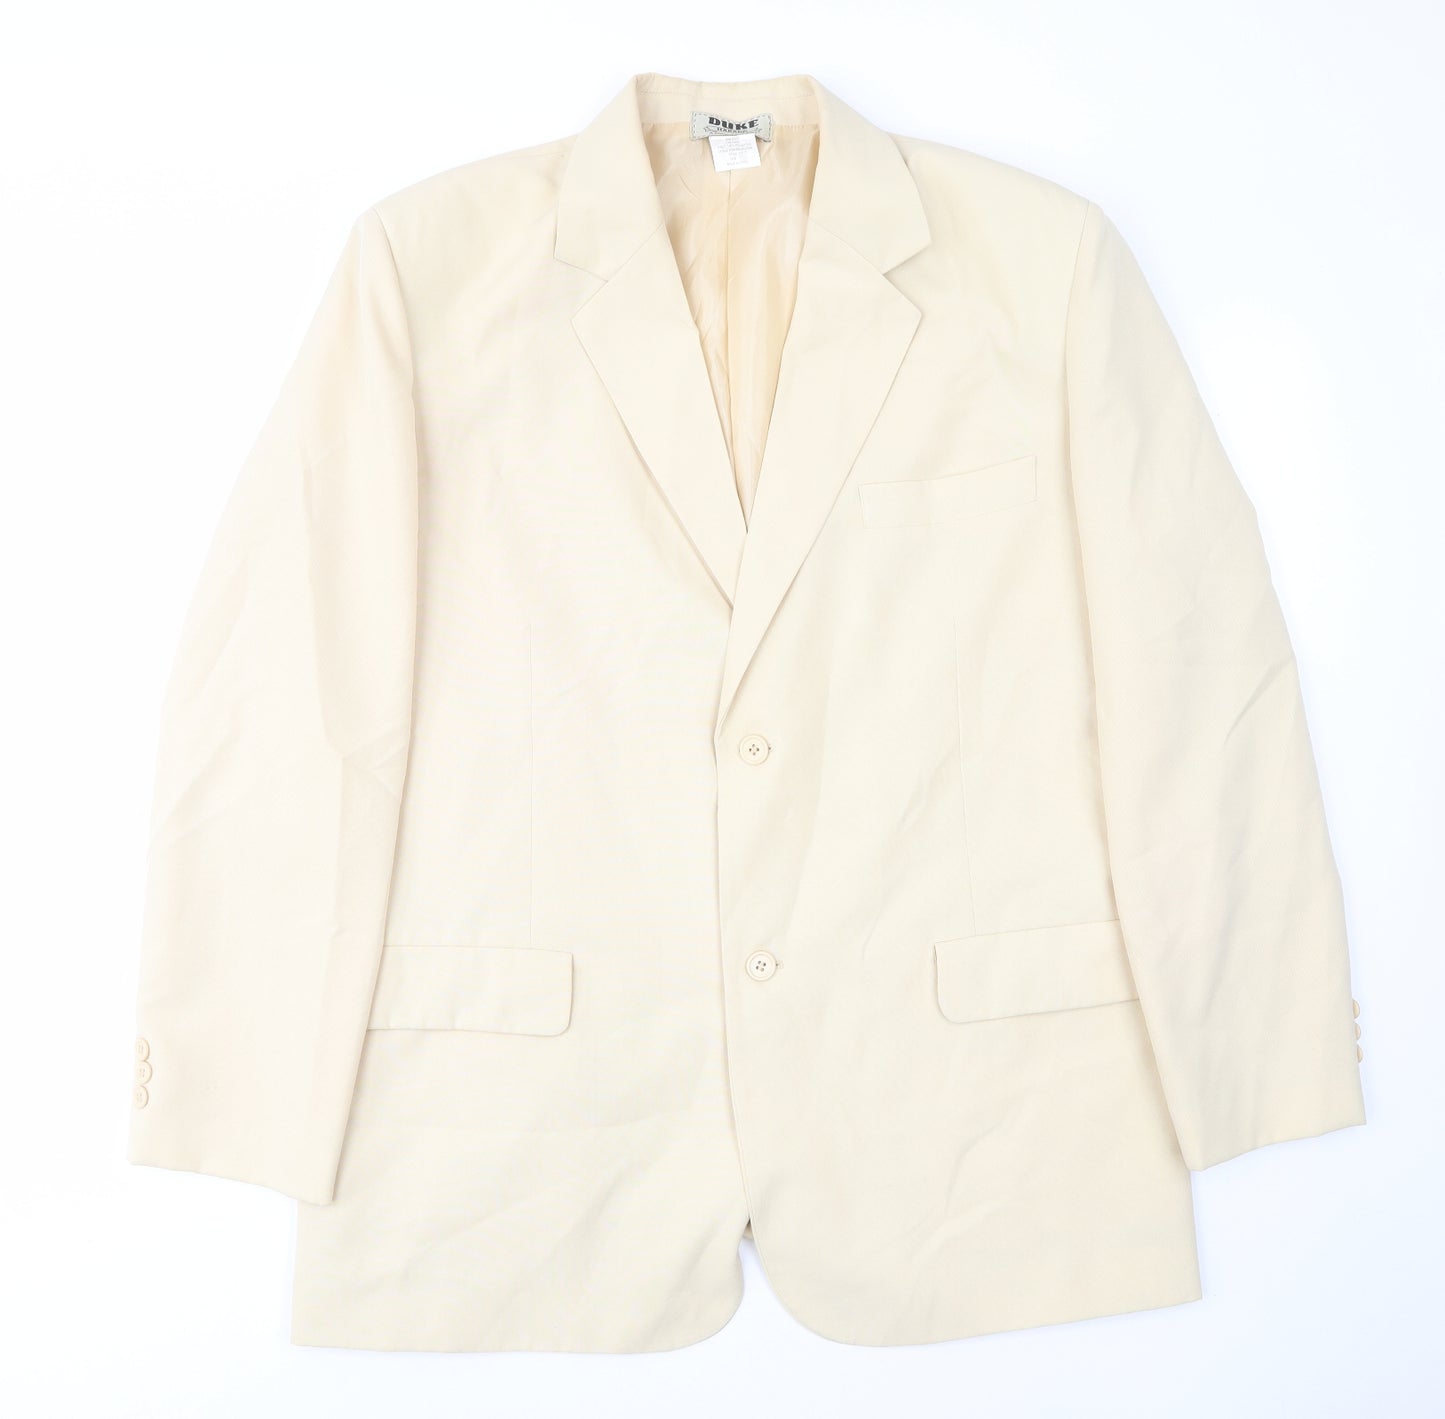 Duke Mens Ivory Polyester Jacket Suit Jacket Size 44 Regular - Pockets